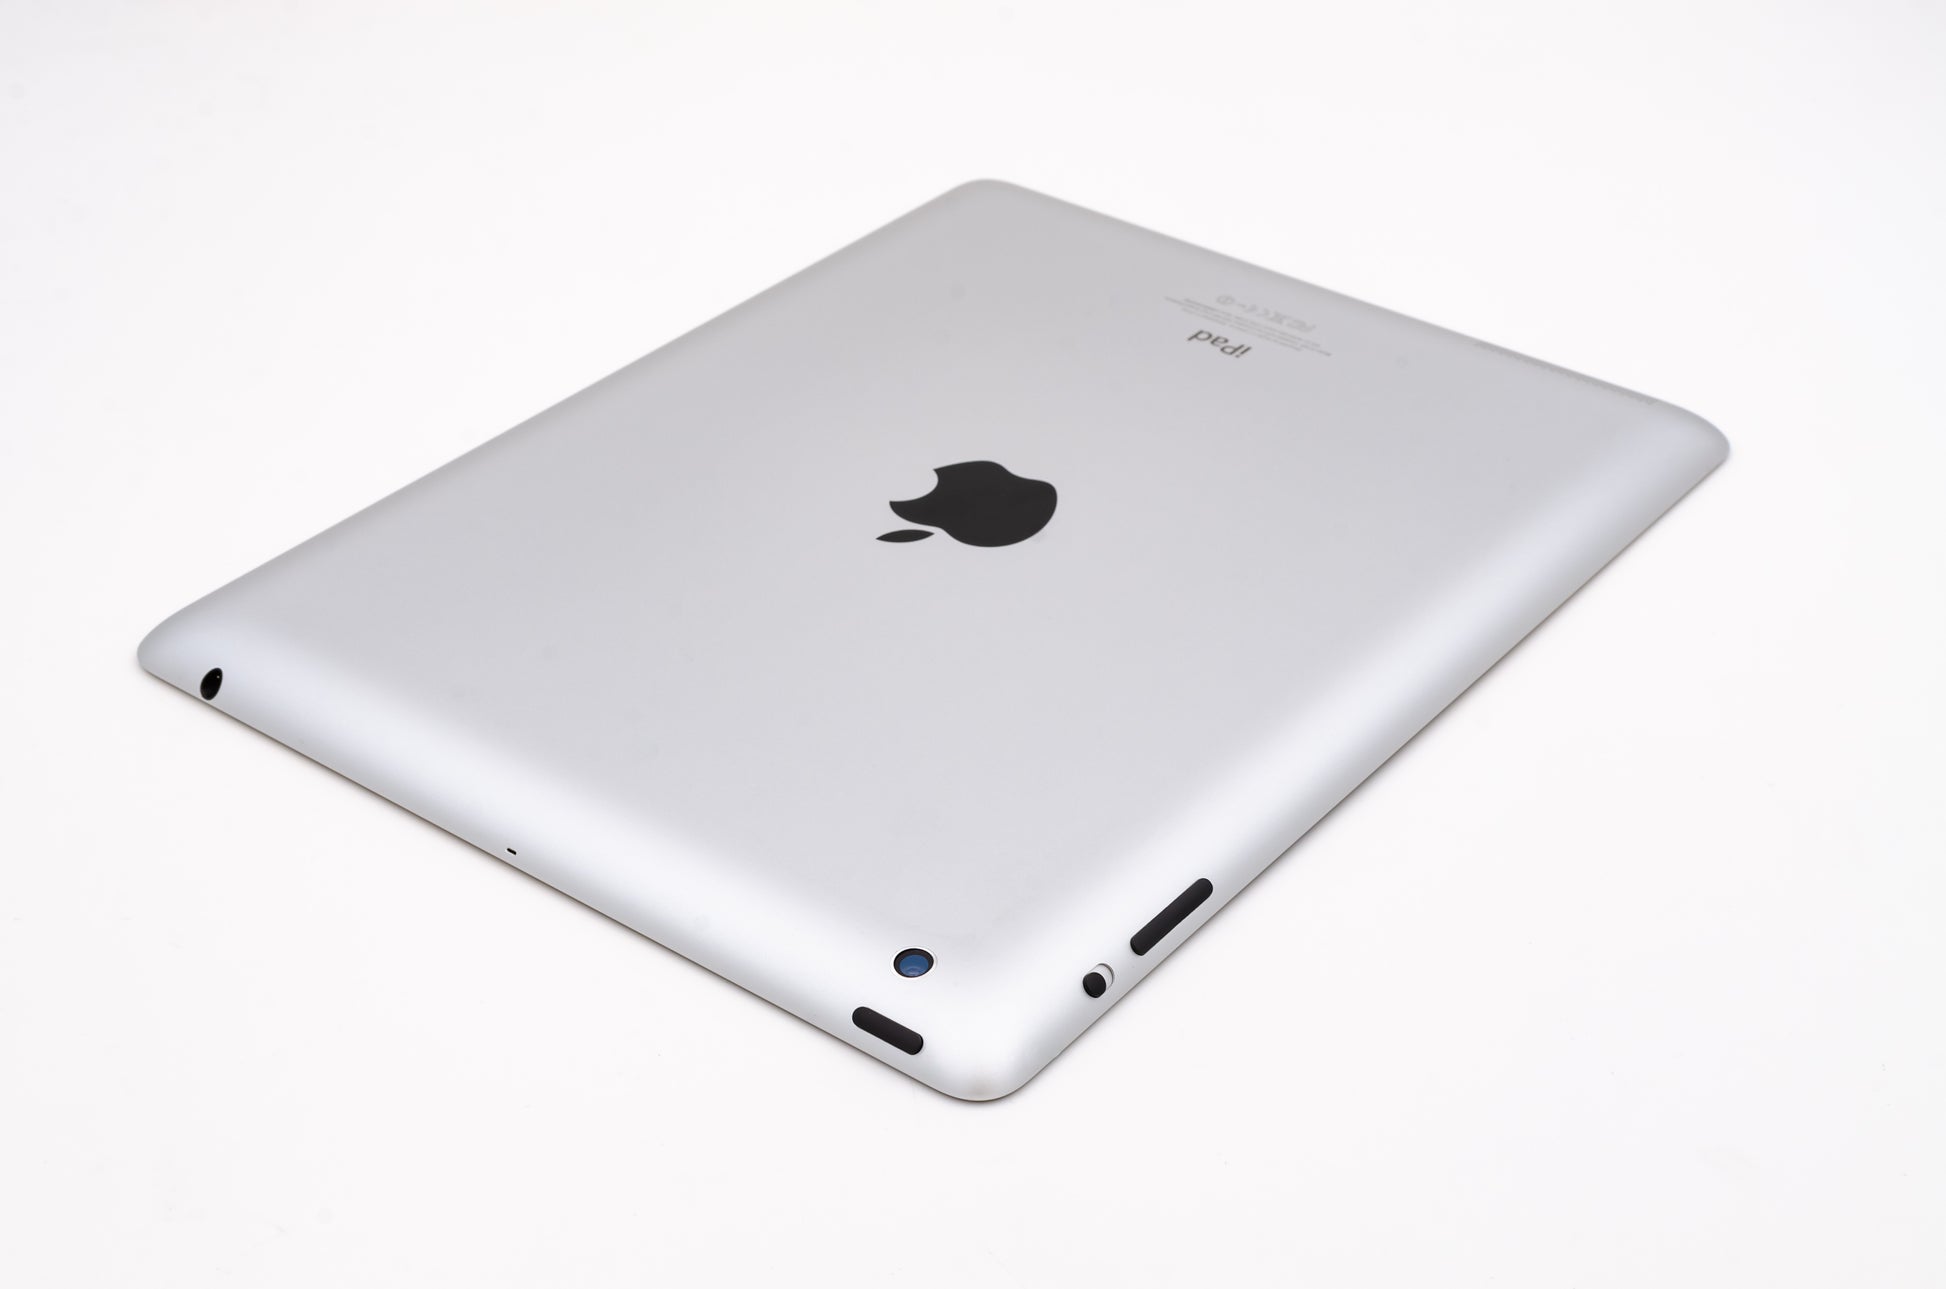 apple-2012-9.7-inch-ipad-4-a1460-silver/white-3